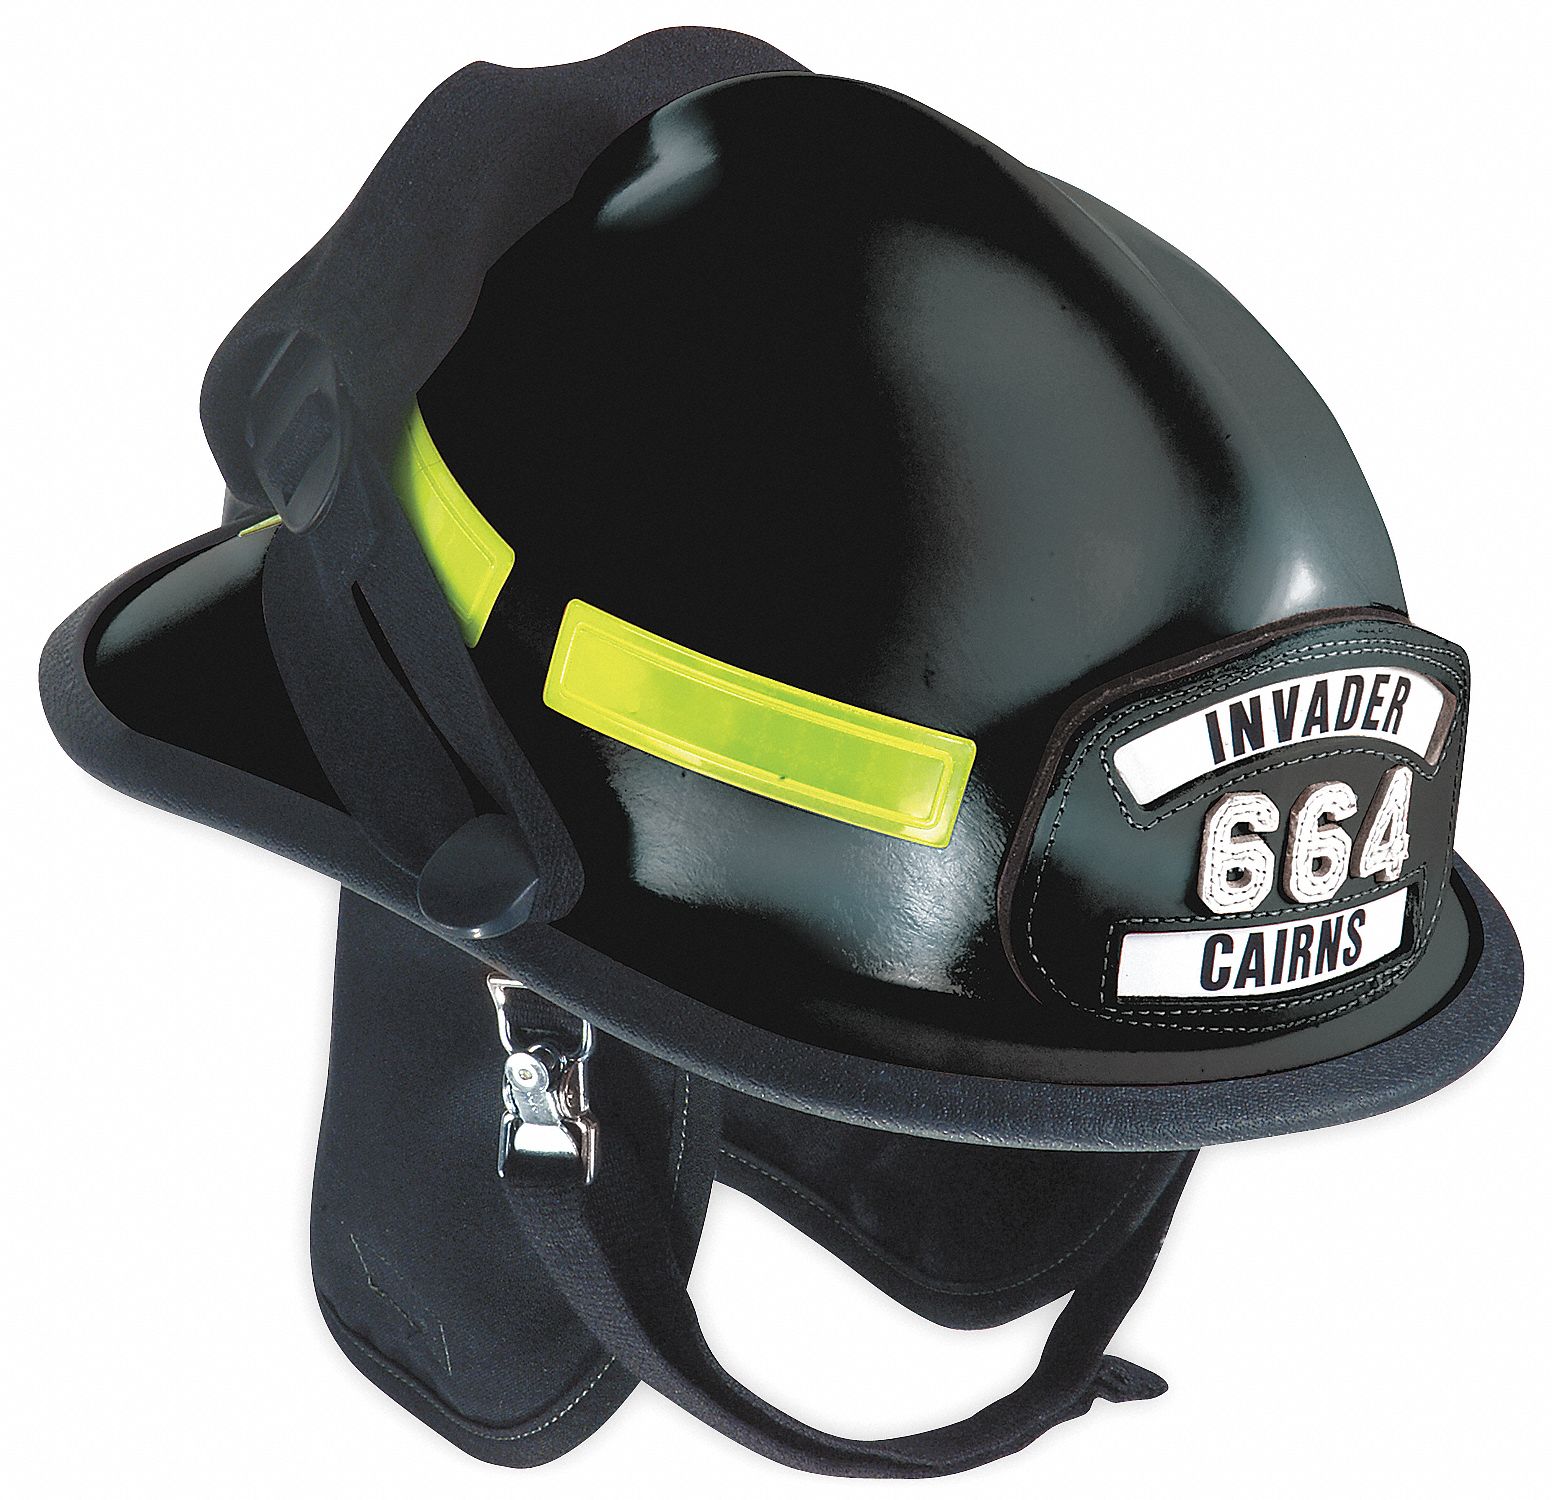 Black Fire Helmet, Shell Material: Fiberglass, Ratchet Suspension, Fits Hat Size: 6-3/8 to 8-3/8"